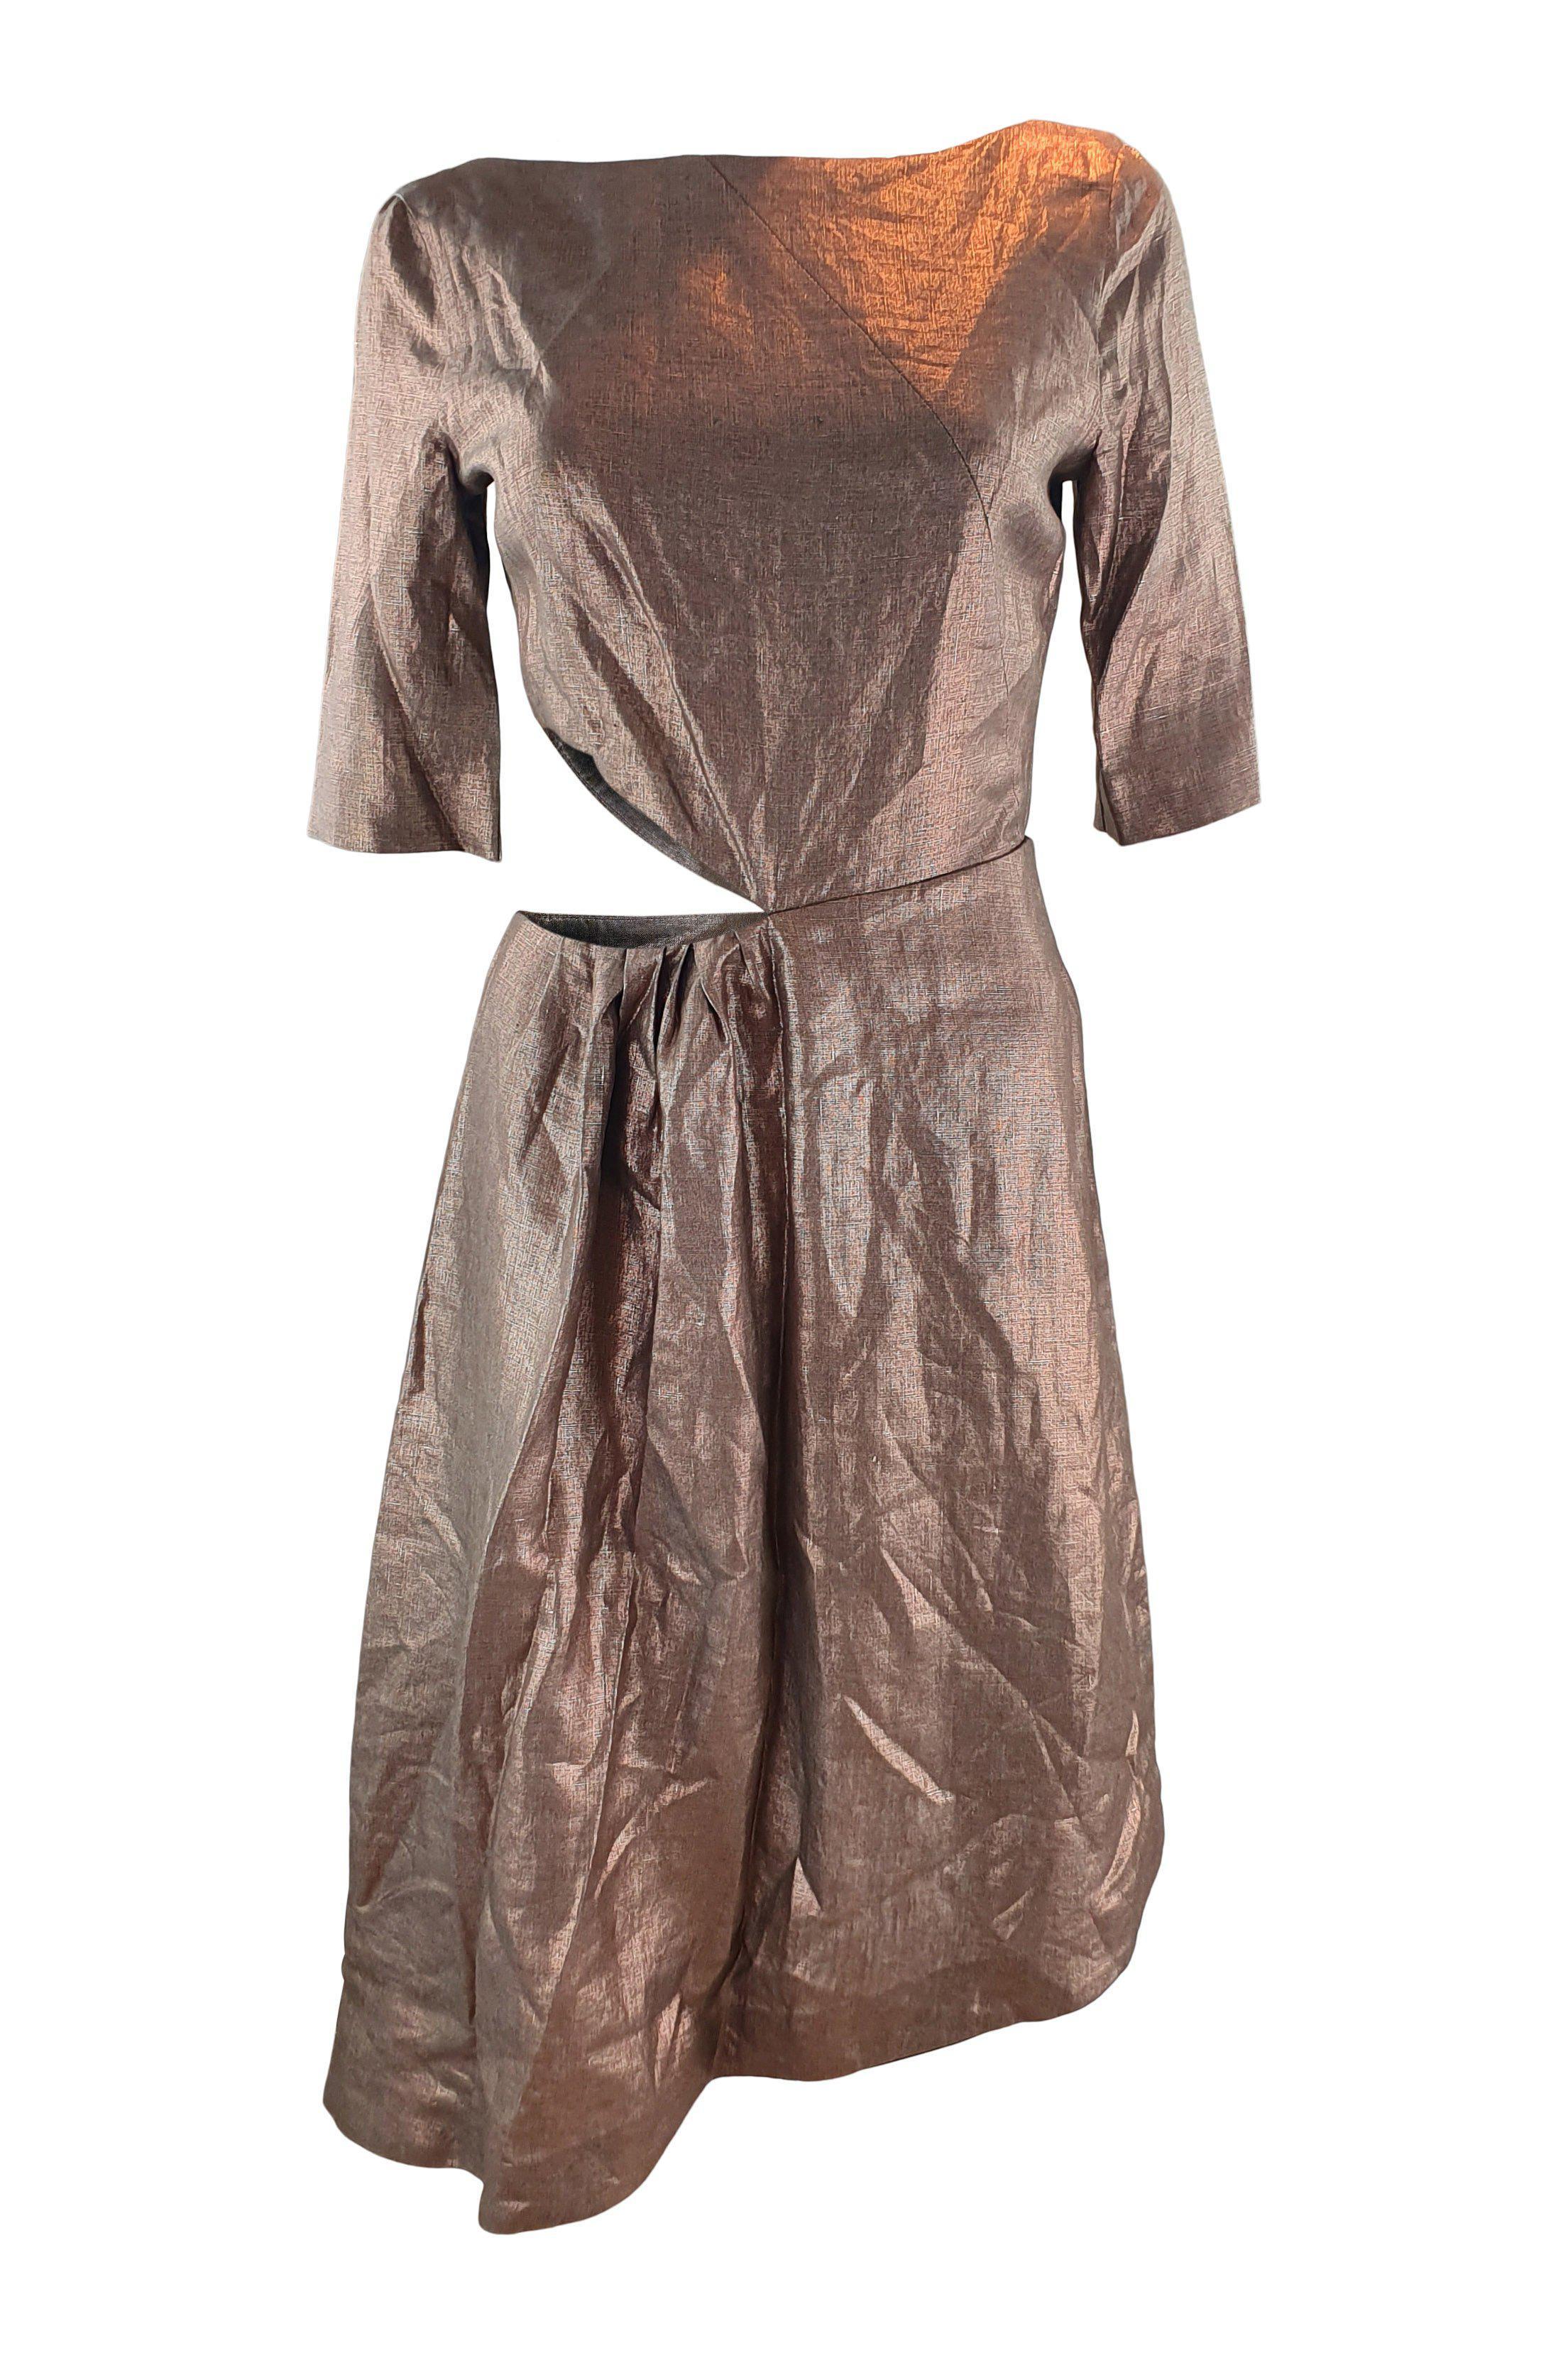 ISA ARFEN Bronze 3/4 Sleeve Cut Out Linen Dress (UK 10)-Isa Arfen-The Freperie